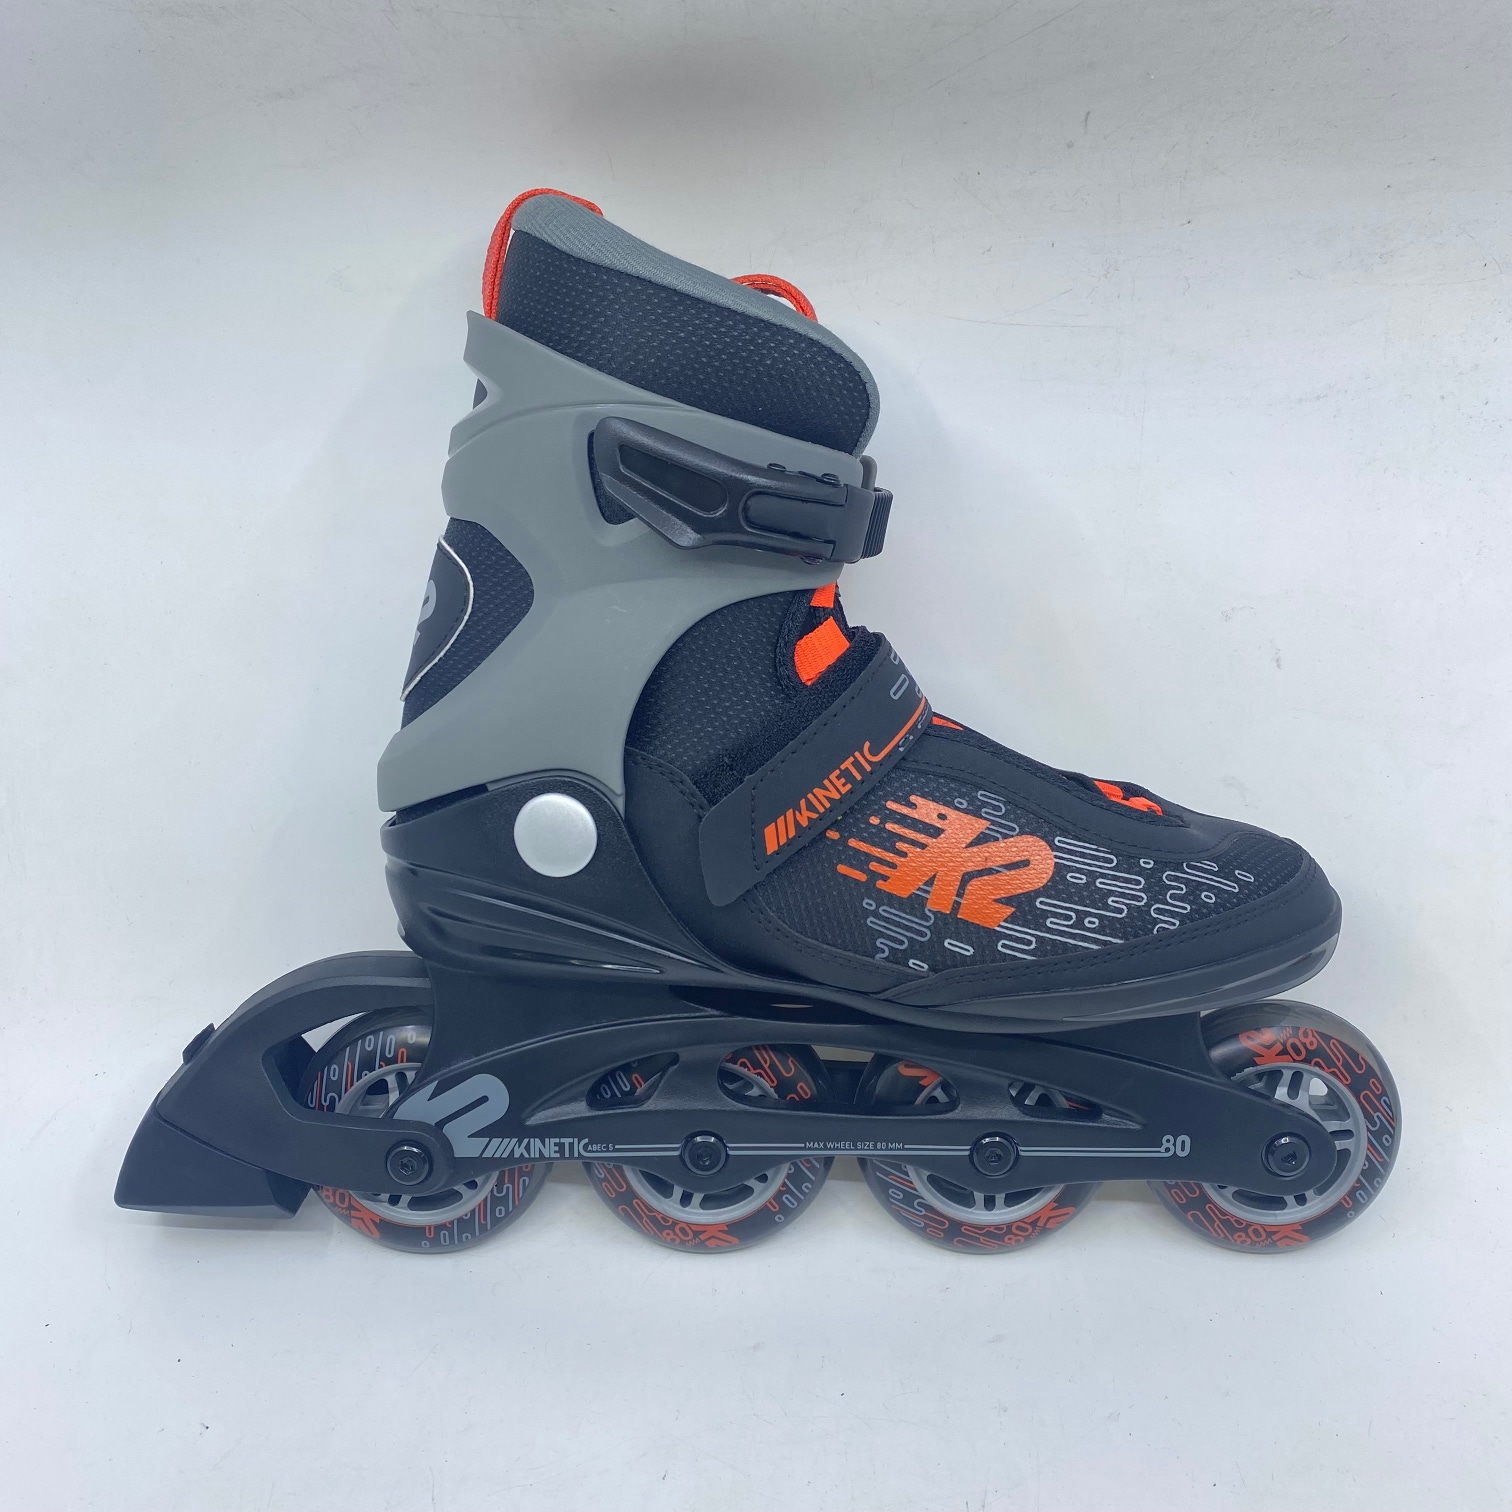 New K2 Inline Skates Regular Width Size 8